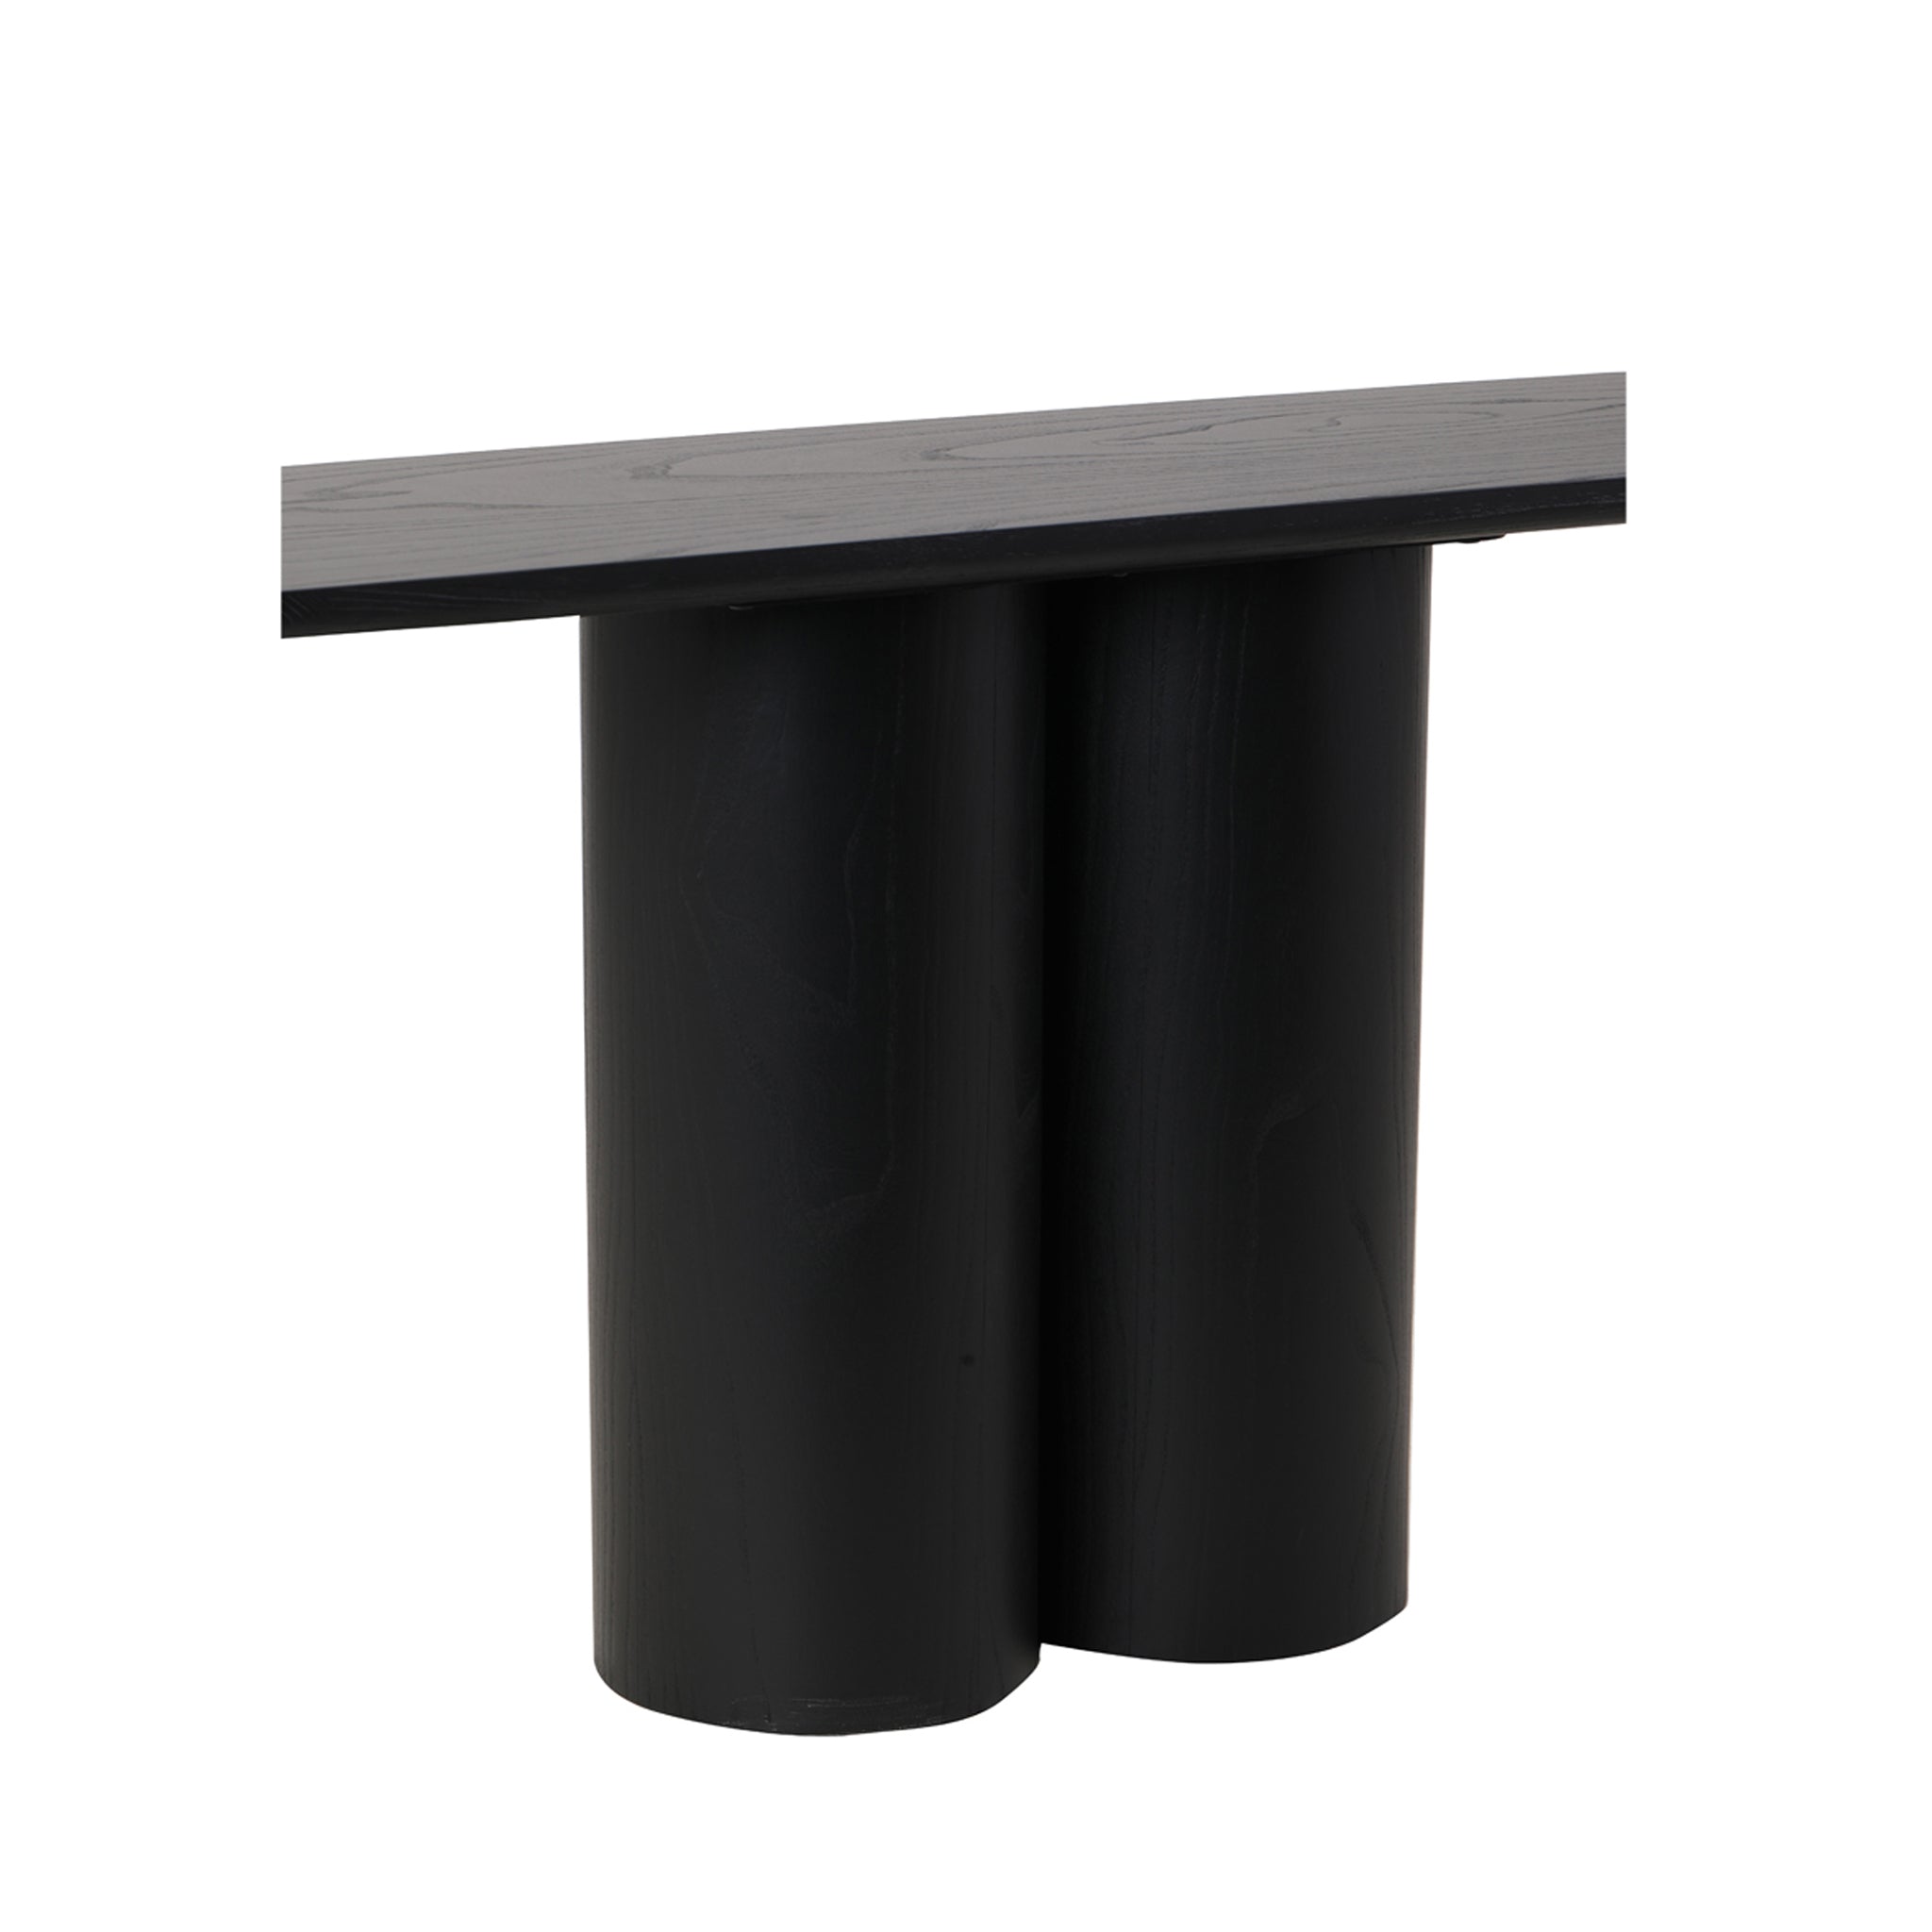 CDT8291-NI 1.4m ELM Console Table - Full Black